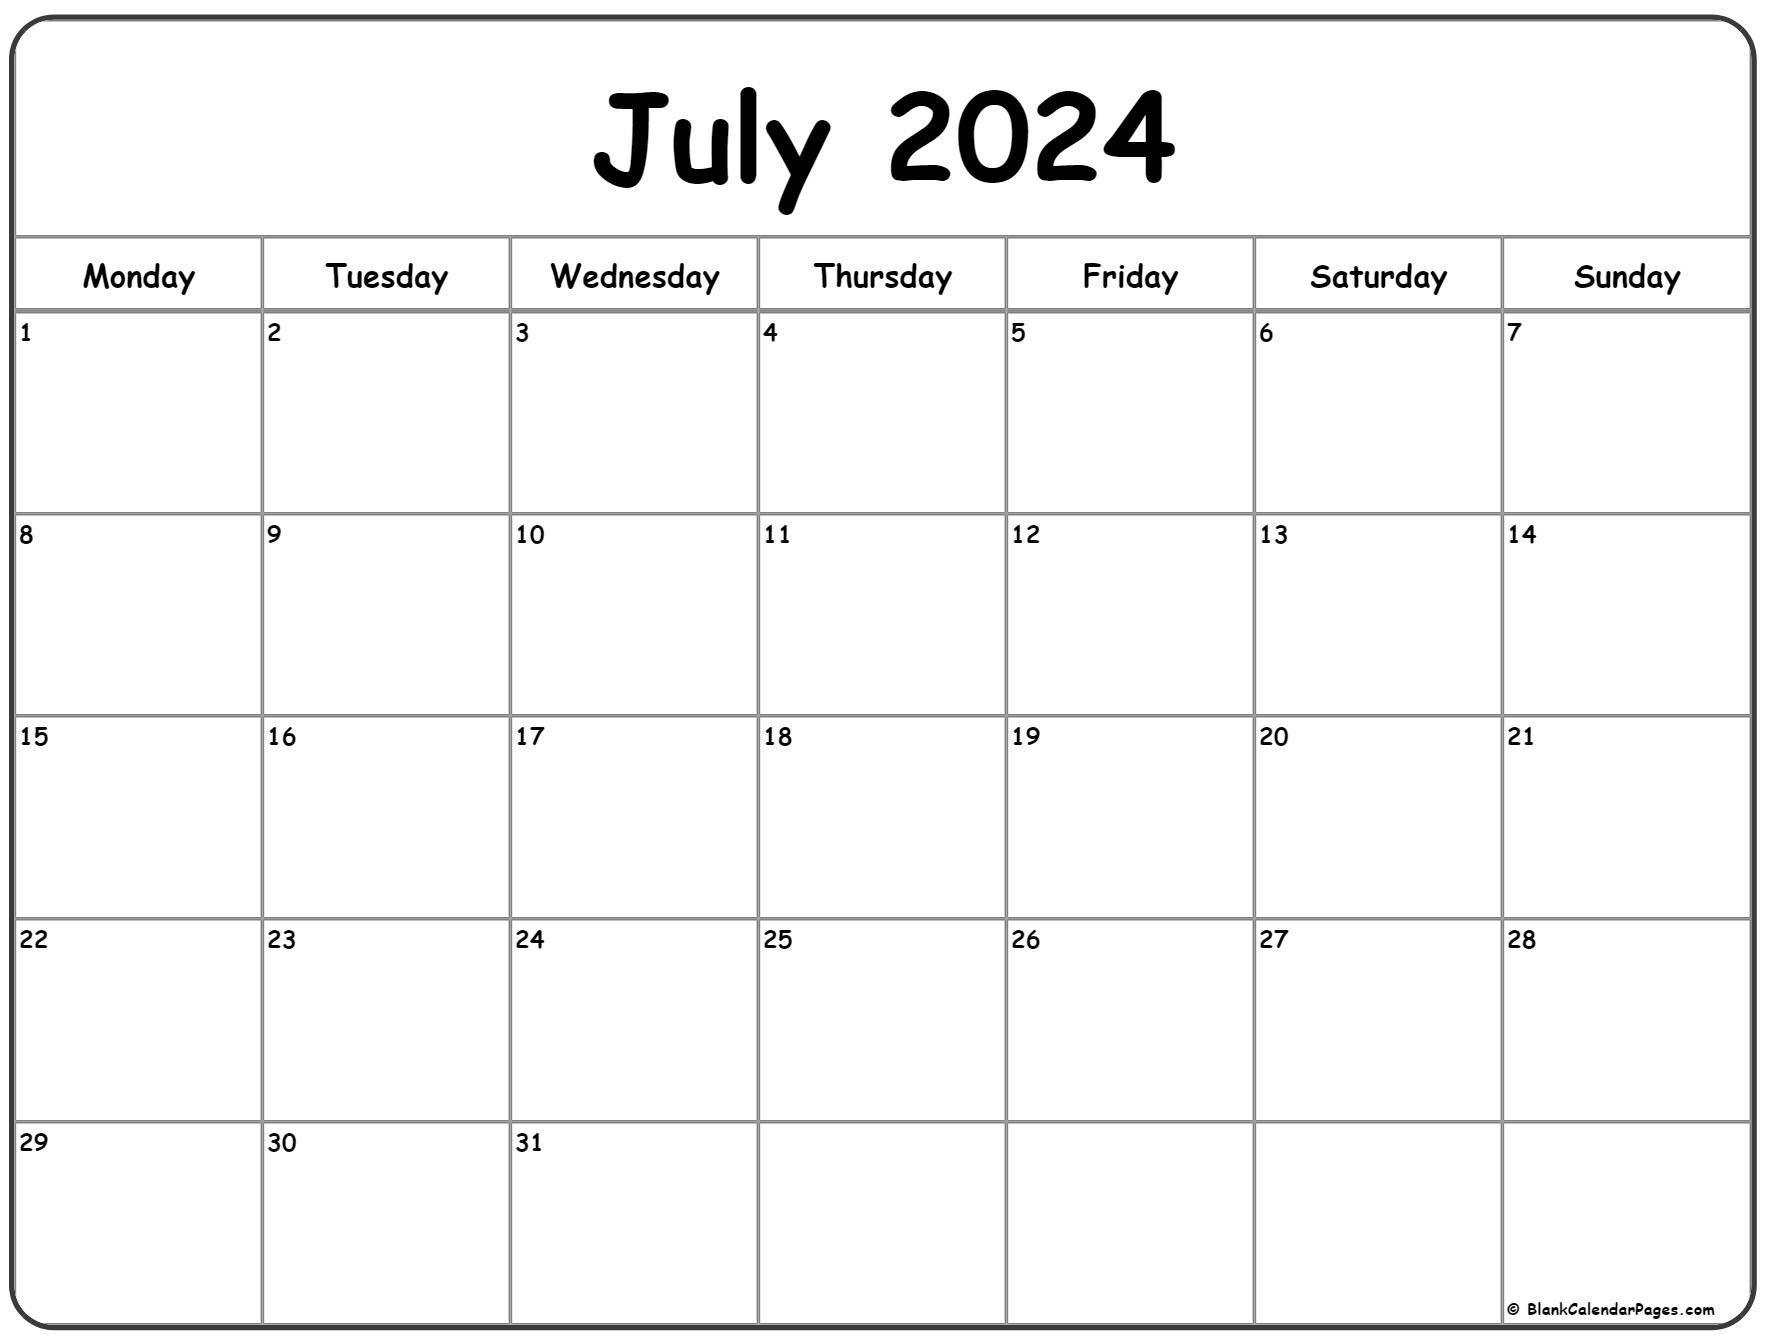 July 2024 Monday Calendar | Monday To Sunday throughout Daily Calendar July 2024